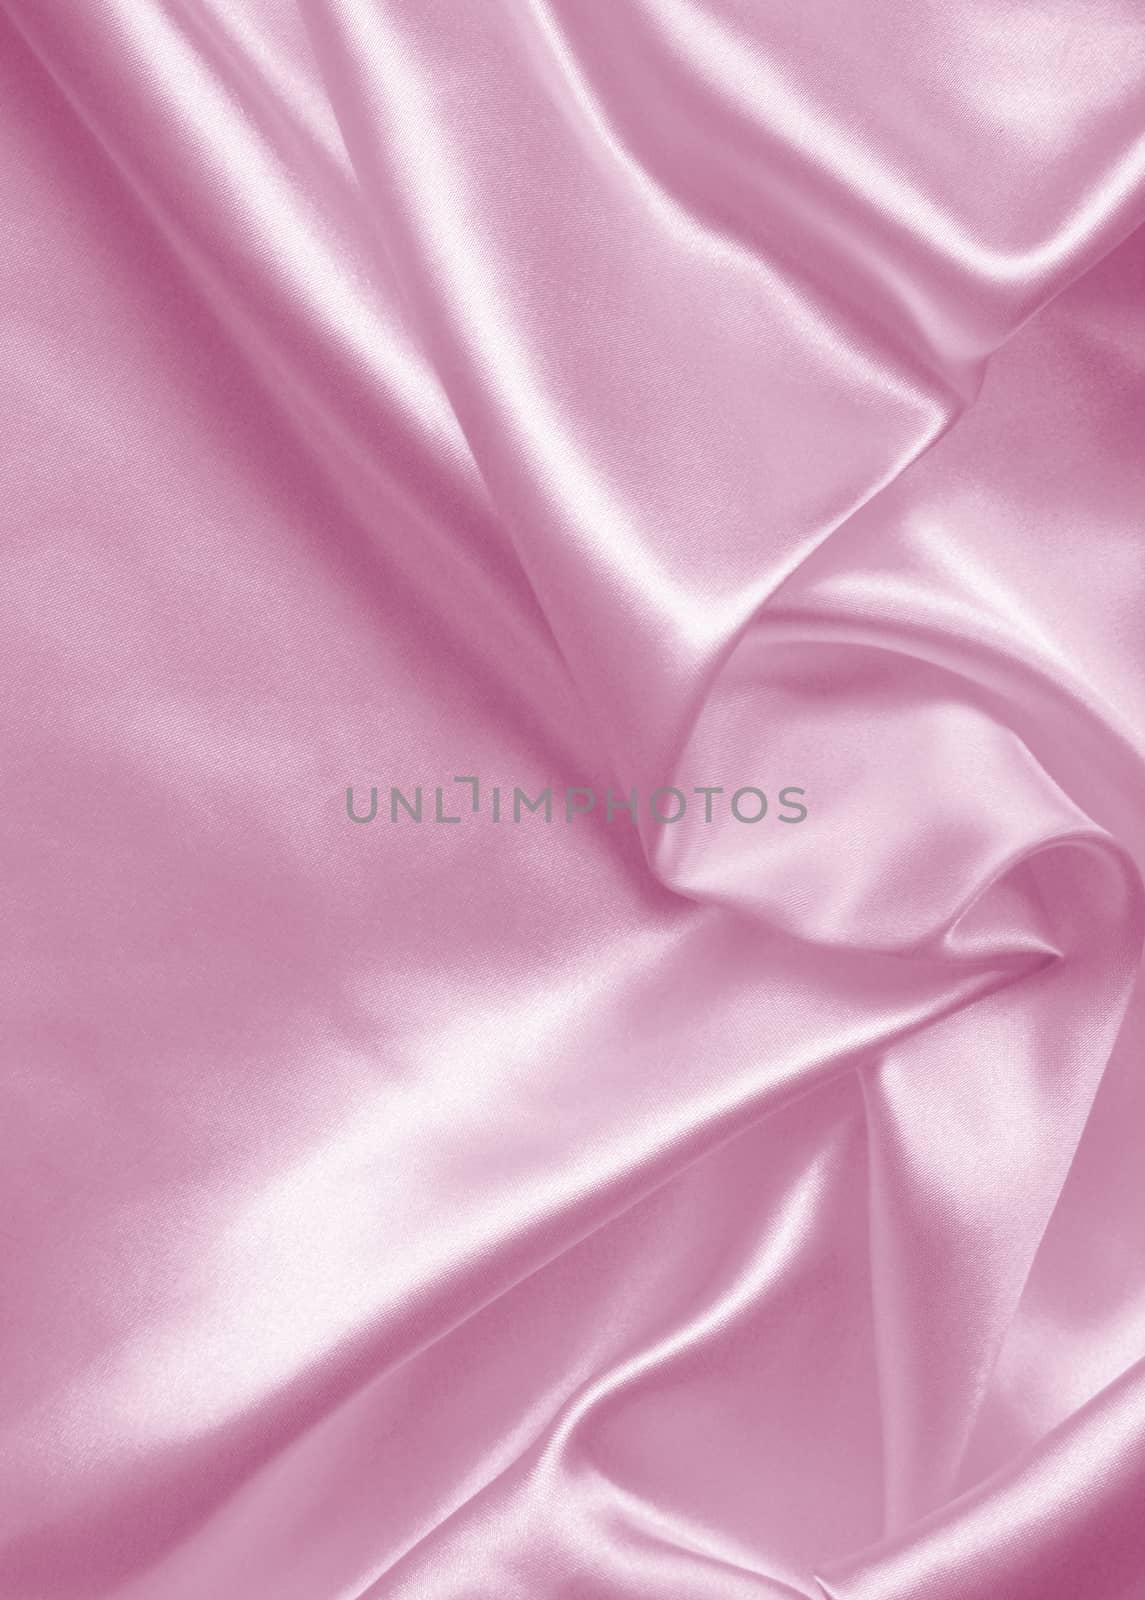 Smooth elegant pink silk or satin as wedding background by oxanatravel